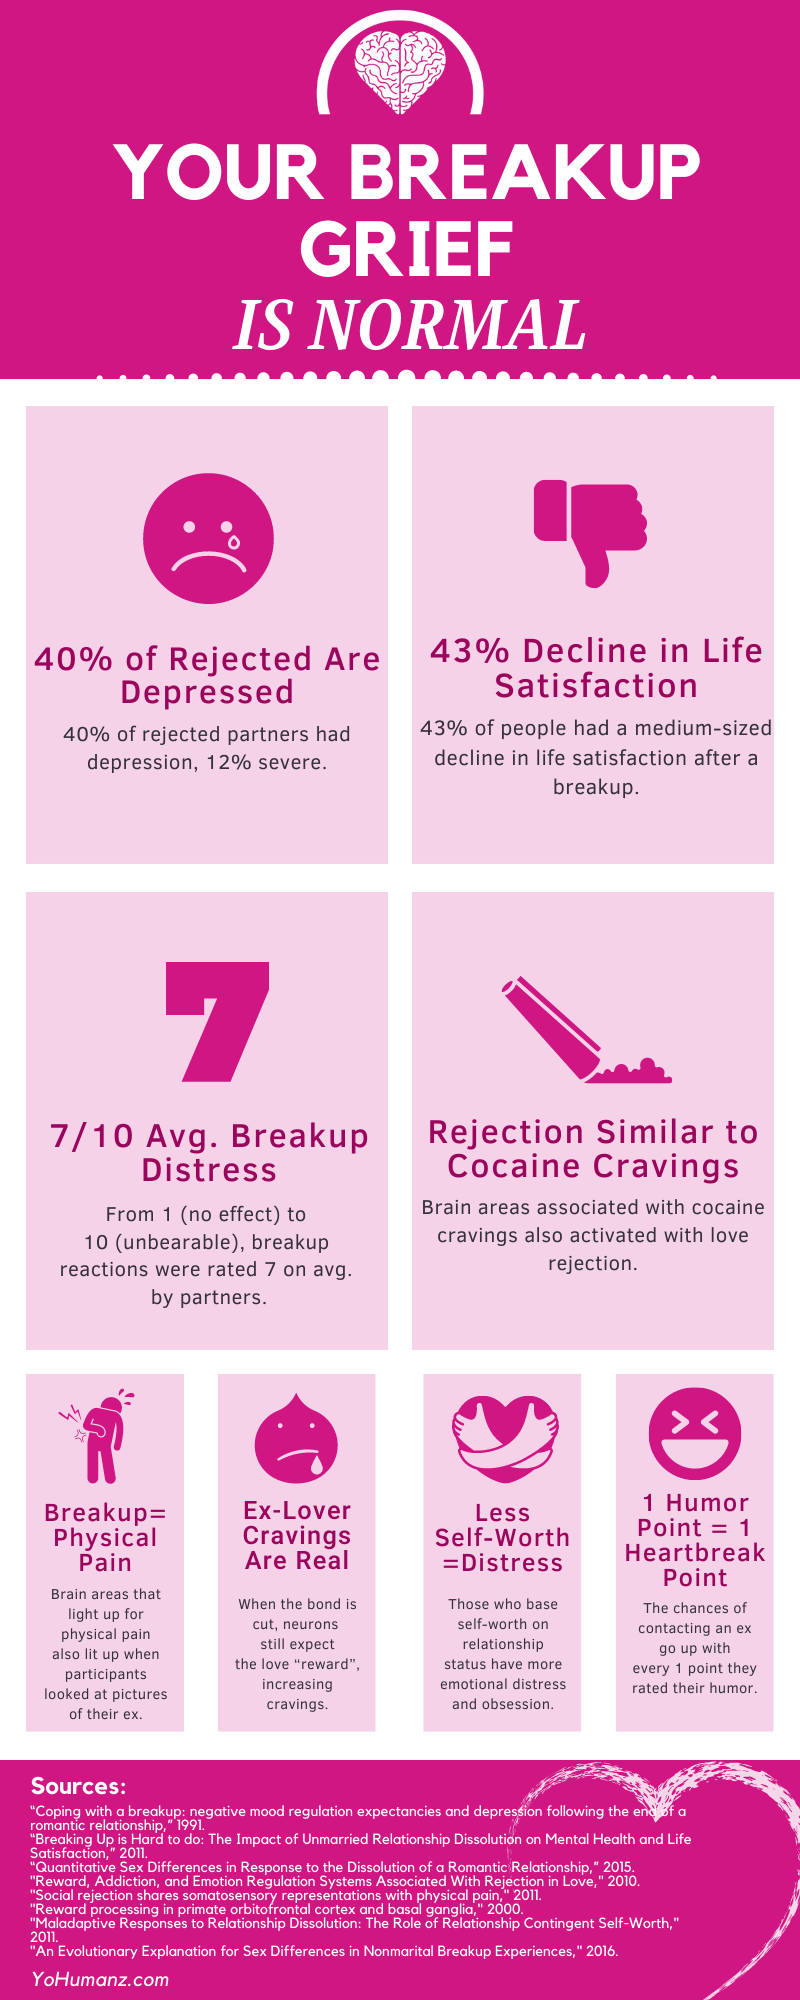 breakup grief infographic